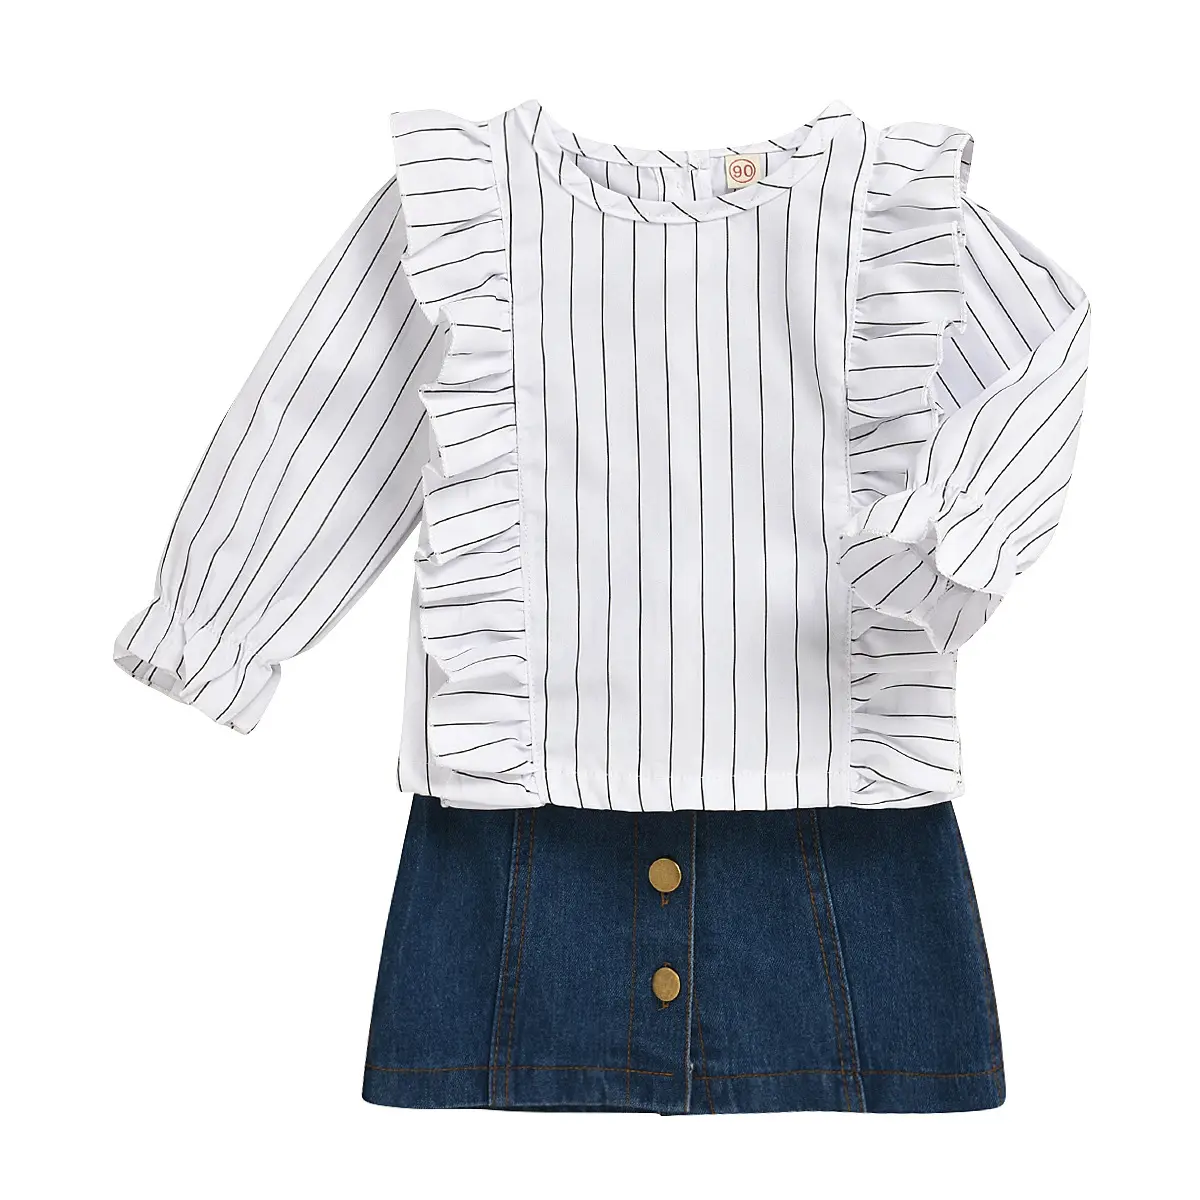 हाओ बच्चे बच्चों बुना धारीदार बढ़ती शिल्प लंबी आस्तीन जैकेट बच्चे डेनिम स्कर्ट बटन कपड़े सेट